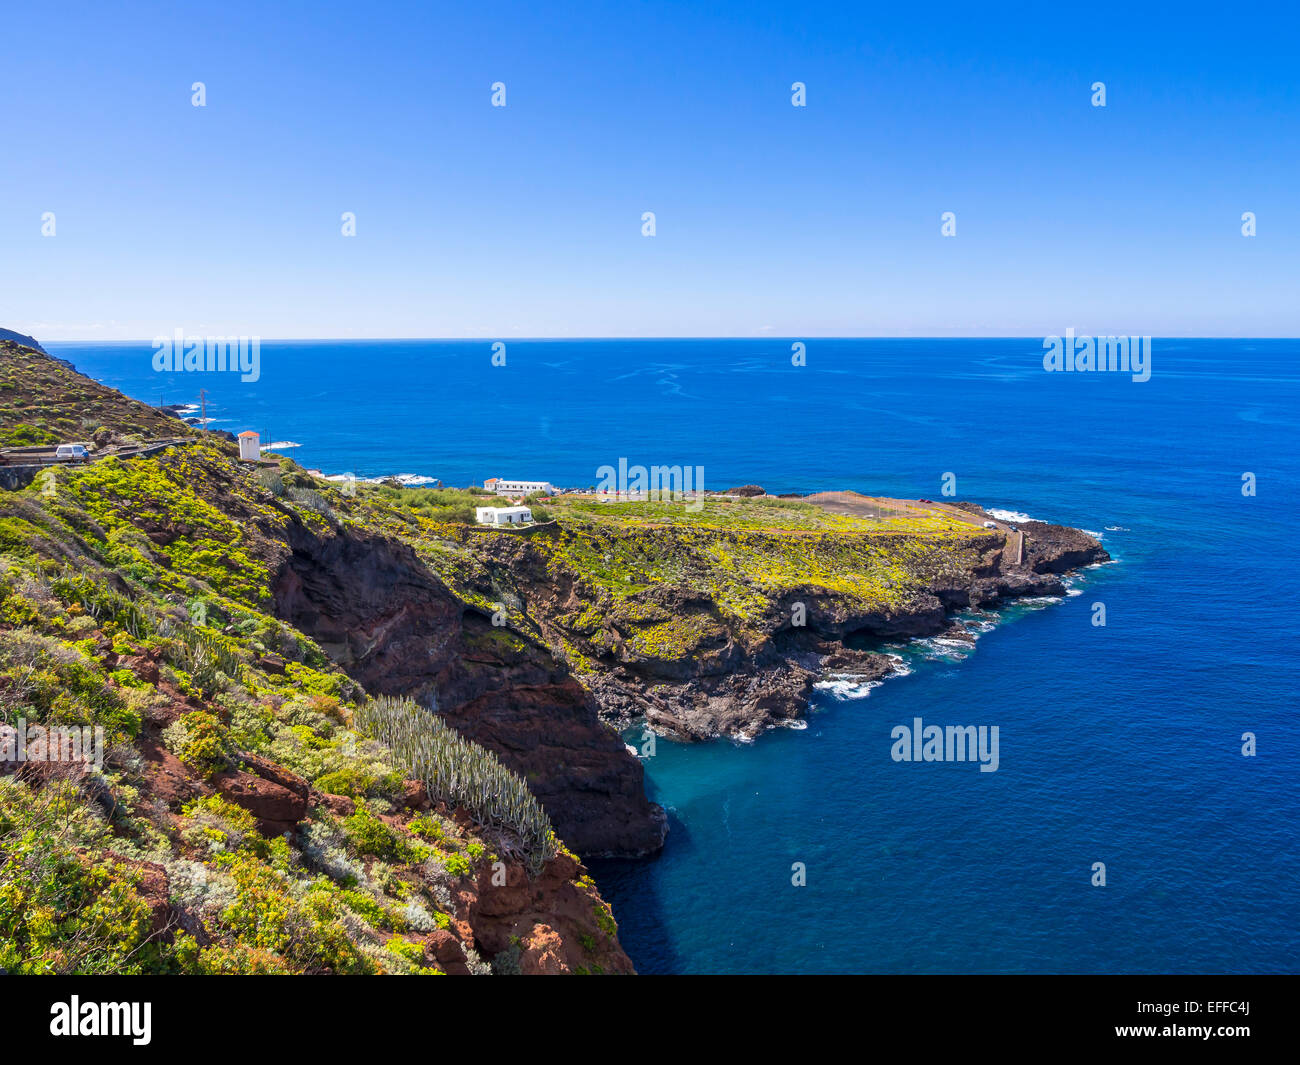 Spain, Canary Islands, La Palma, Barlovento, La Fajana, view to cliff coast with nature bath Stock Photo